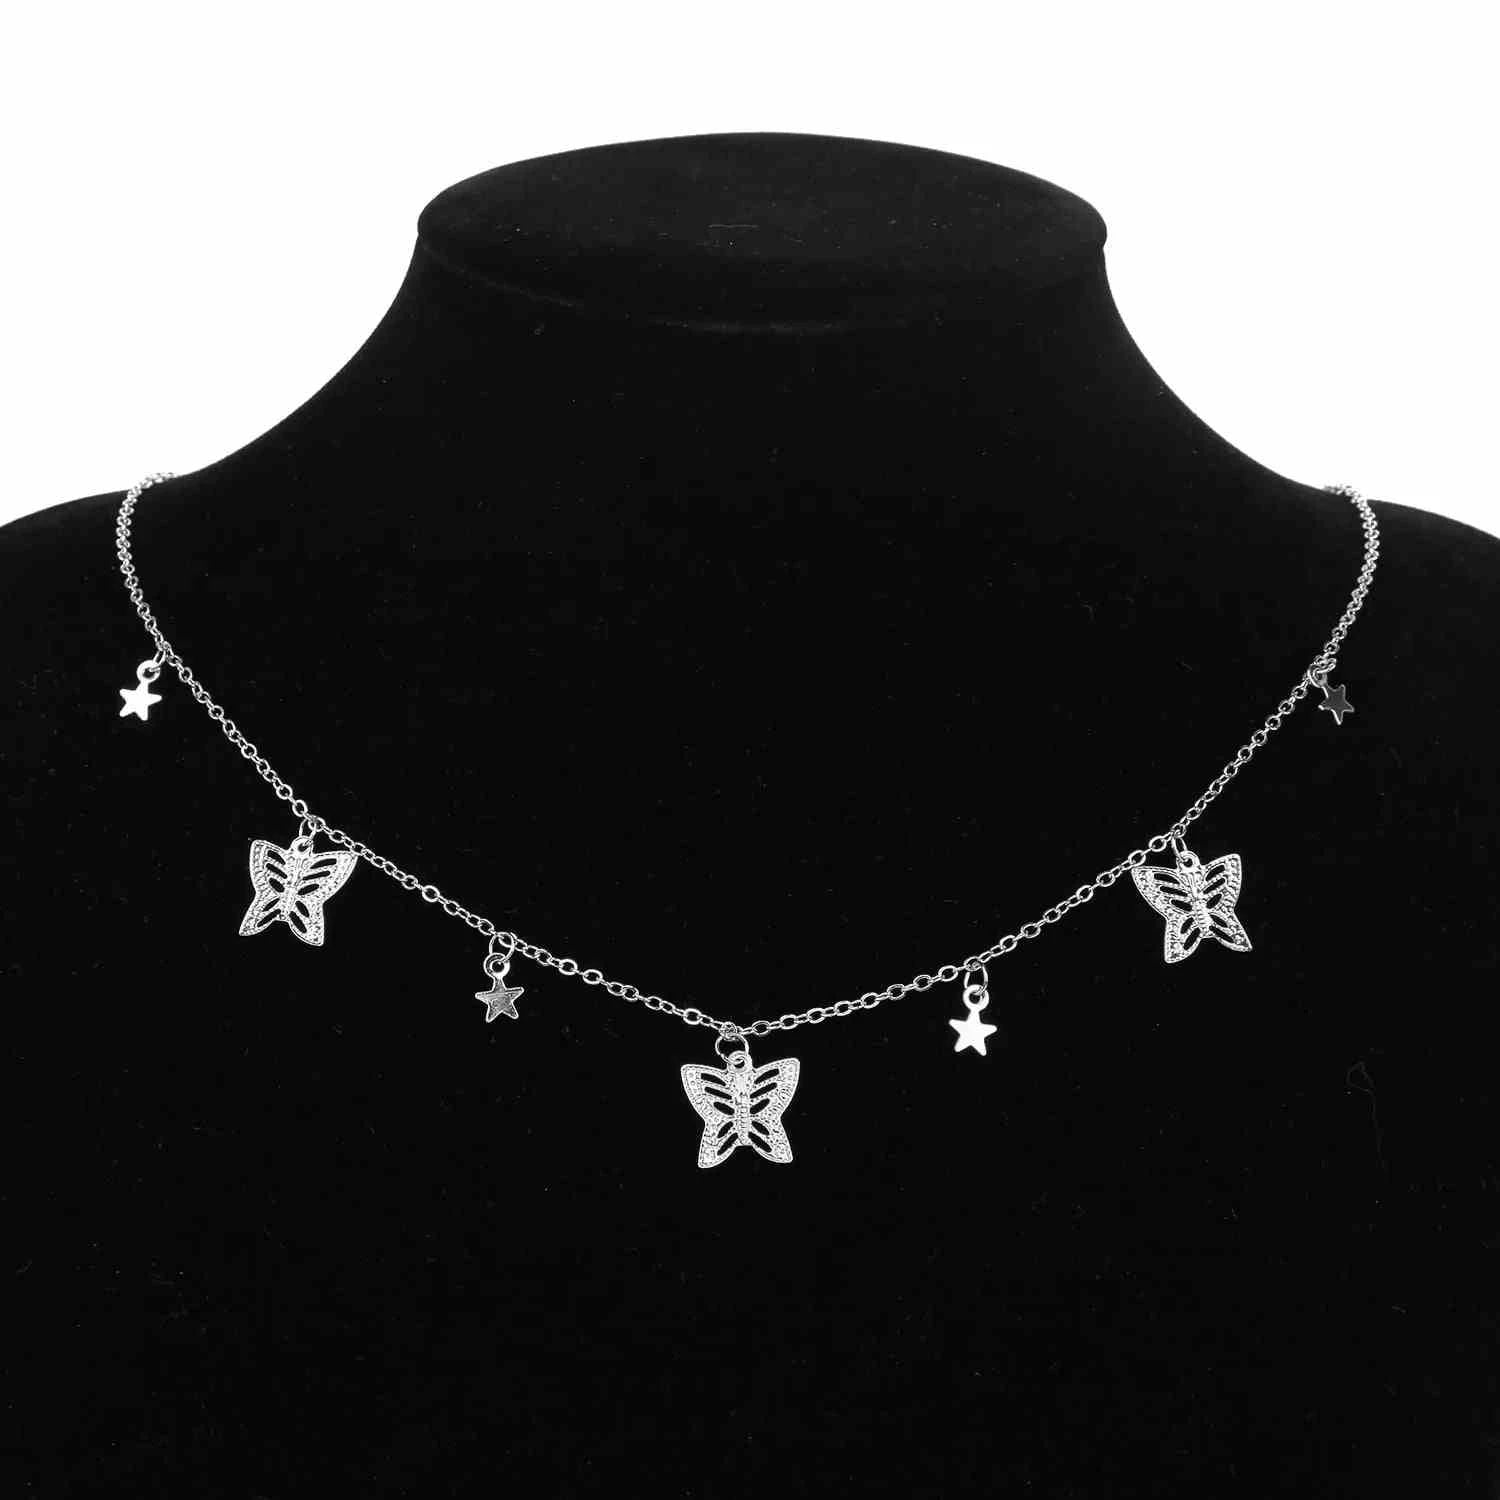 Gold Chain Butterfly Pendant Choker Necklace: Bohemian Beach Jewelry